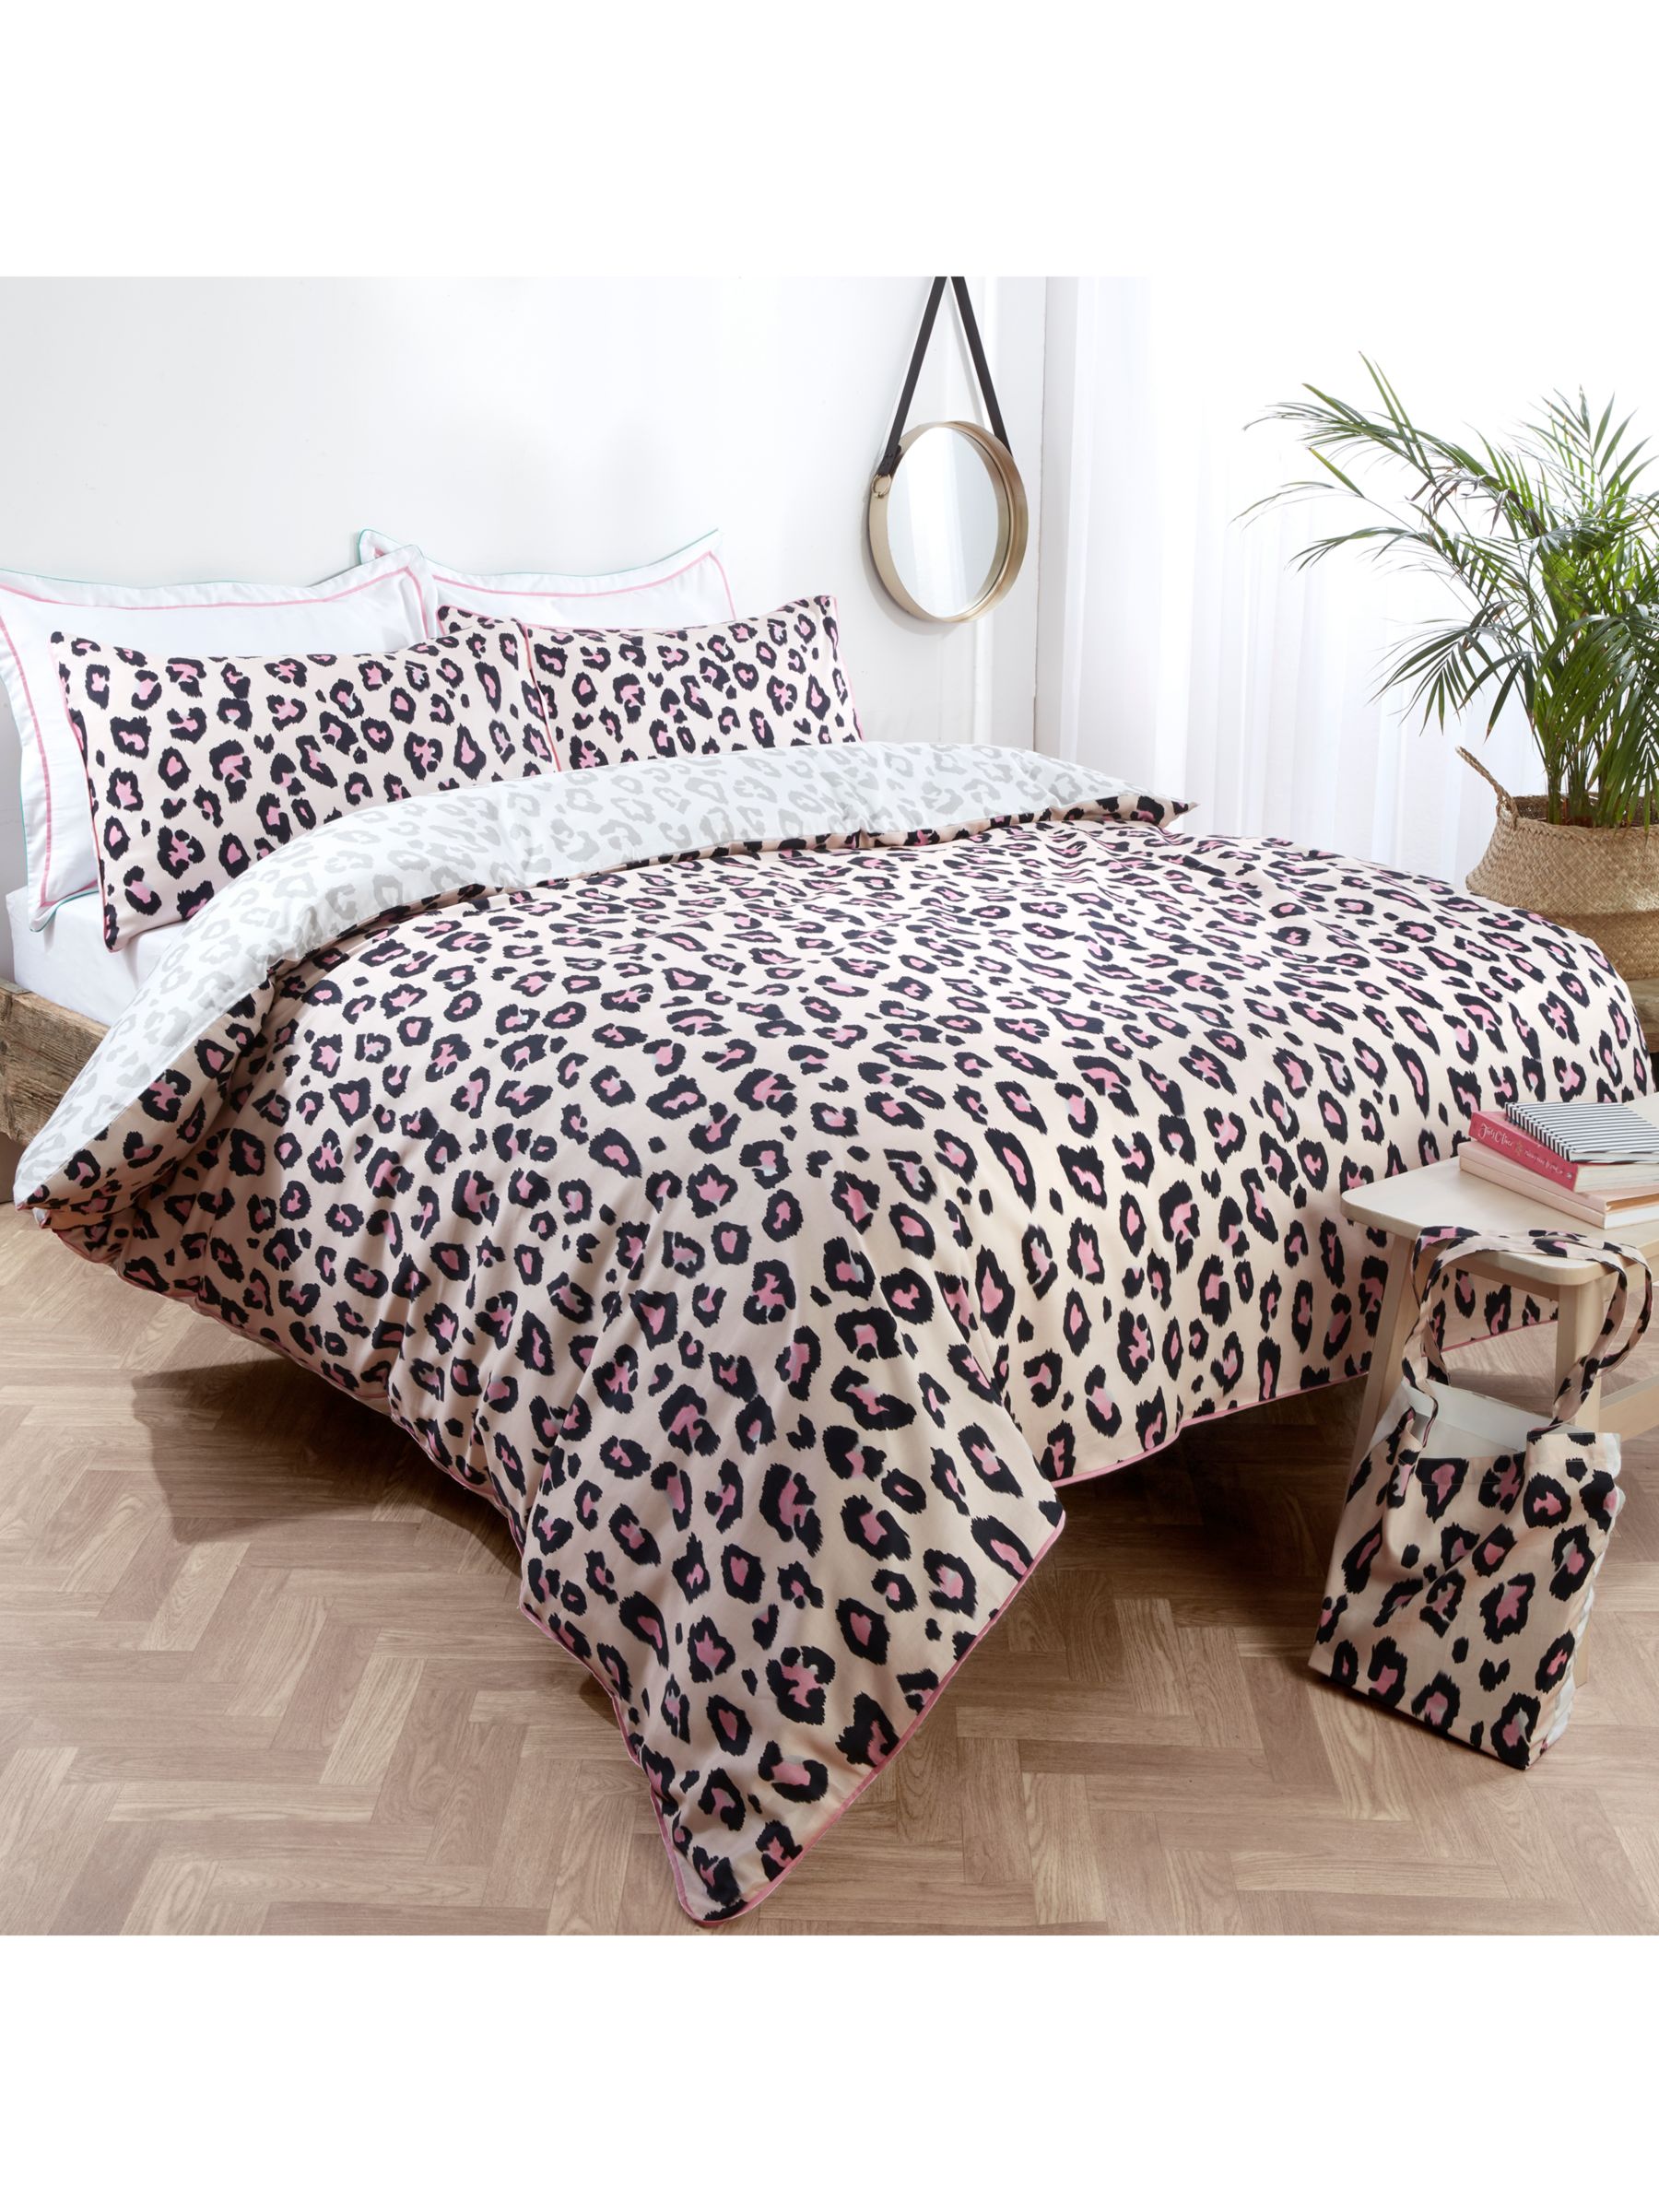 Tabitha Webb Leopard Duvet Cover Set, Cheetah Print Duvet Cover Twin